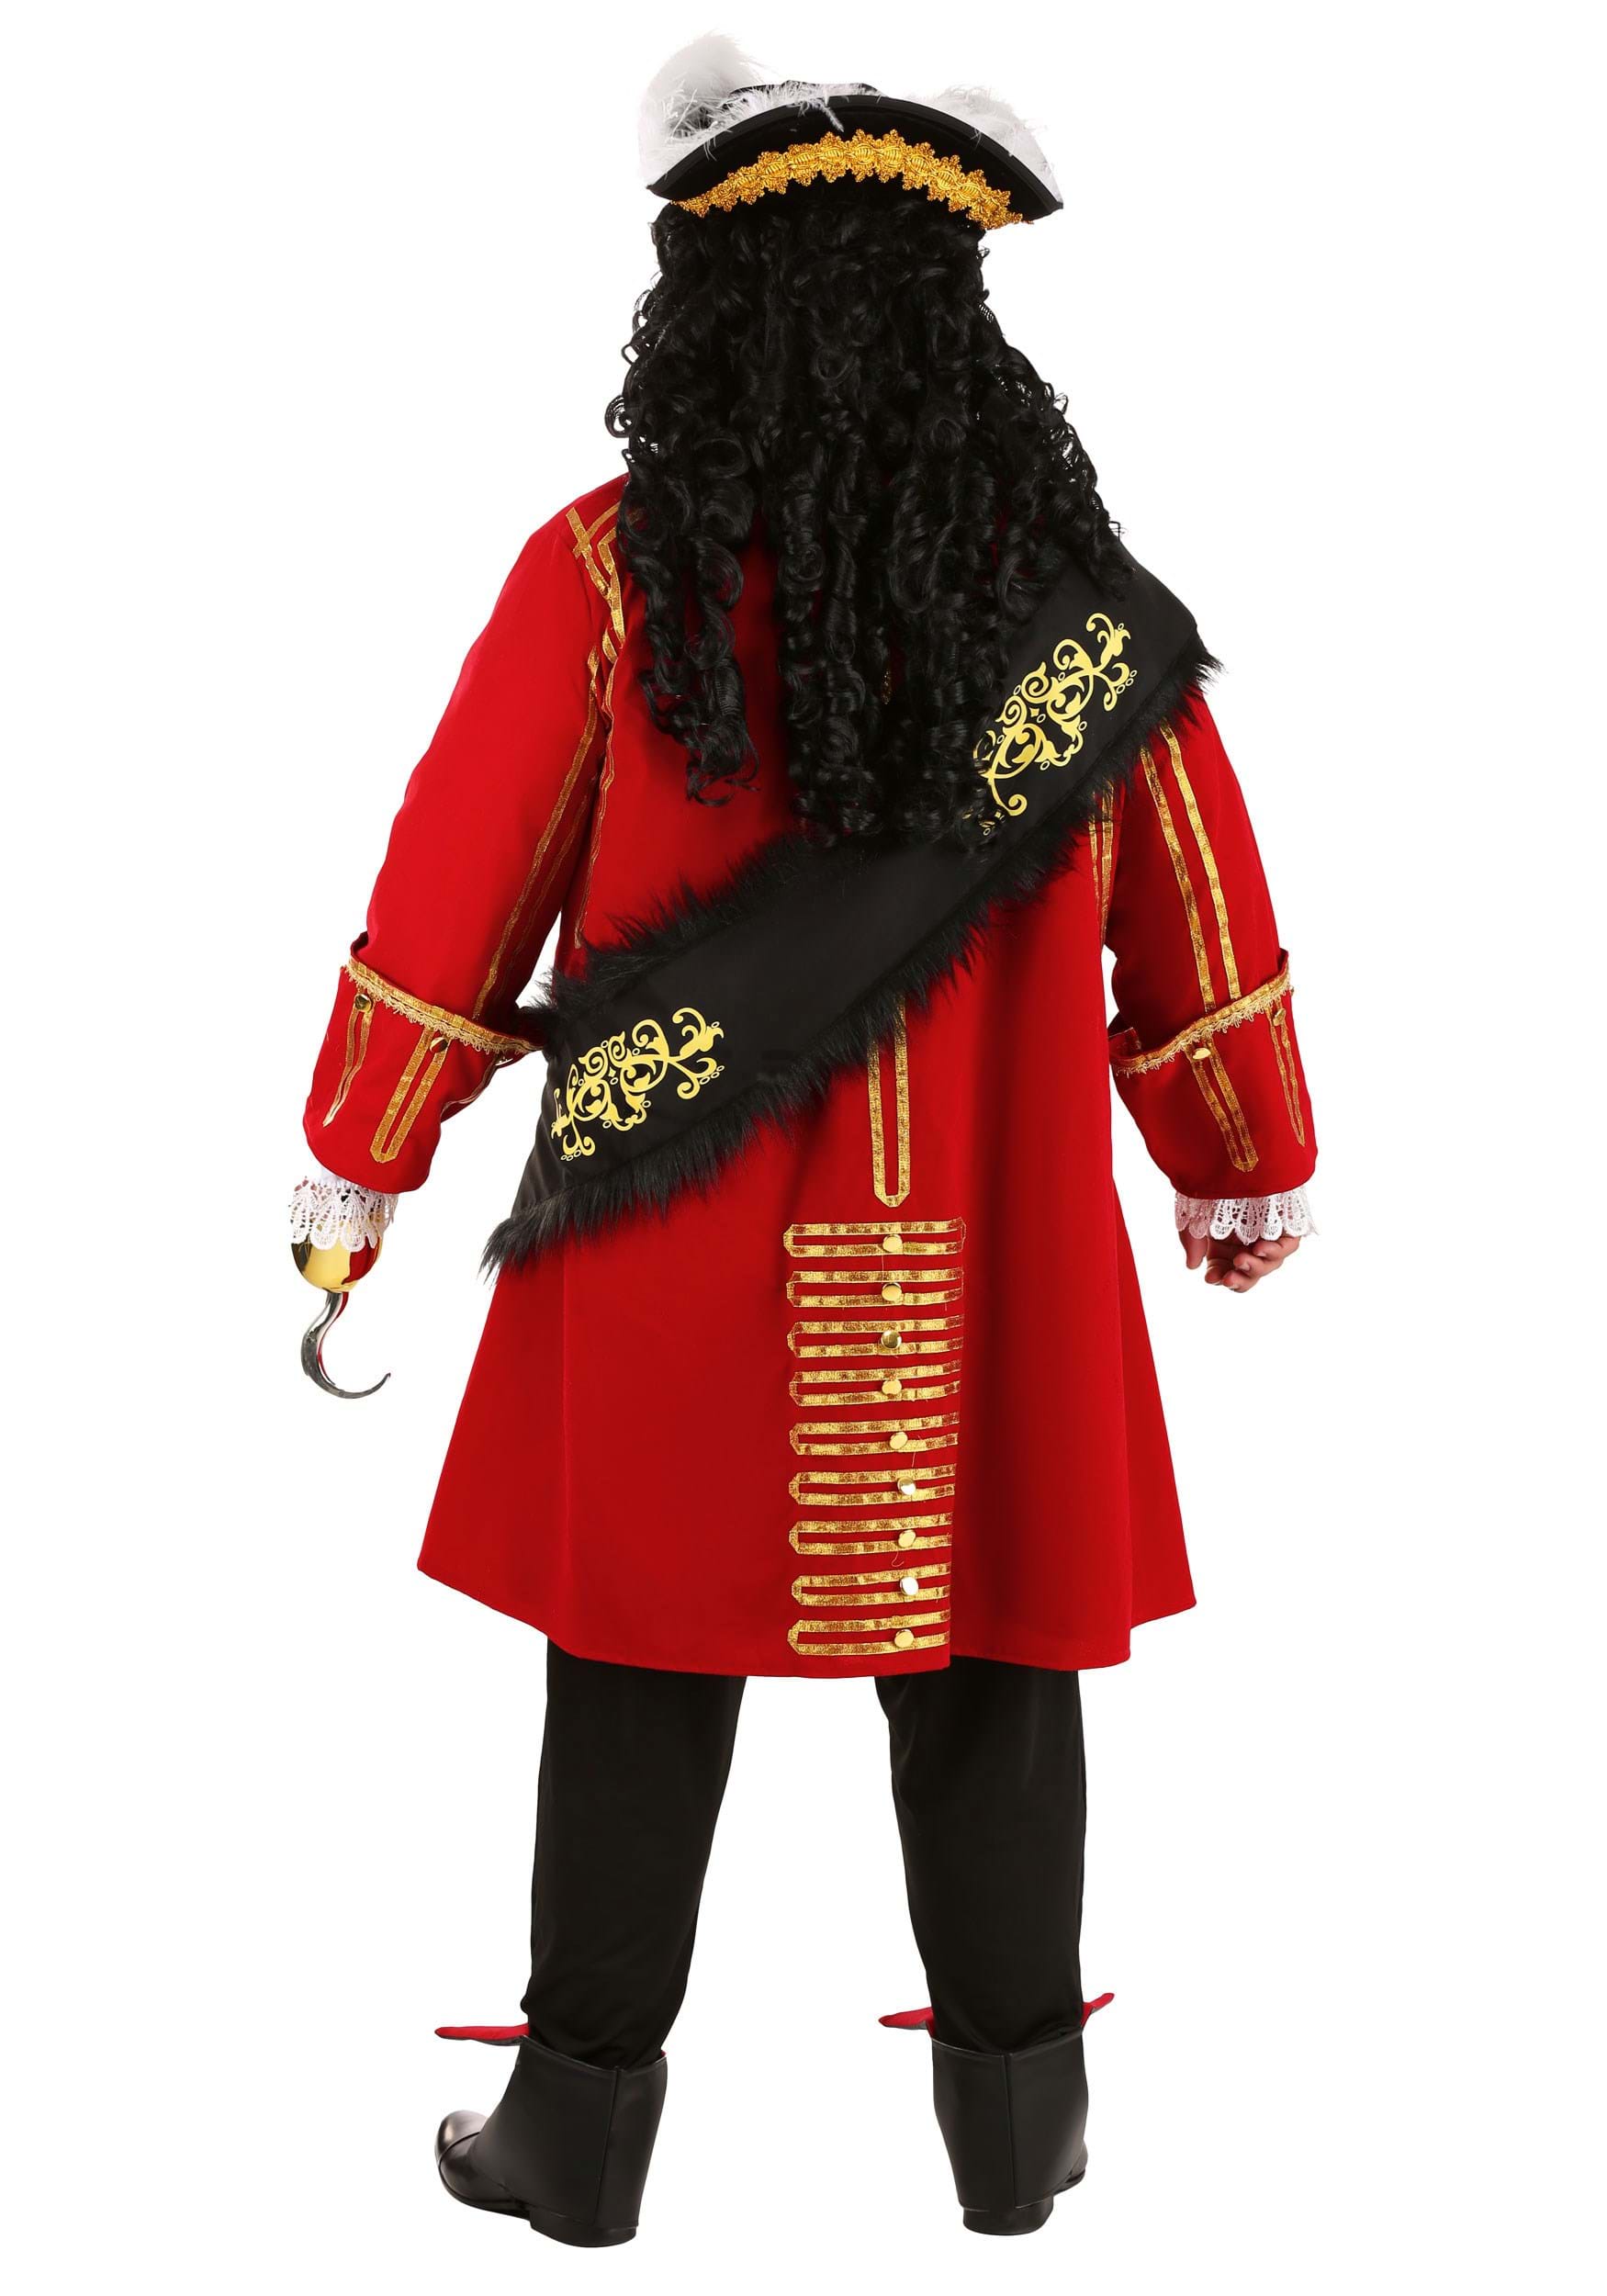 Elite Captain Hook Kid's Costume